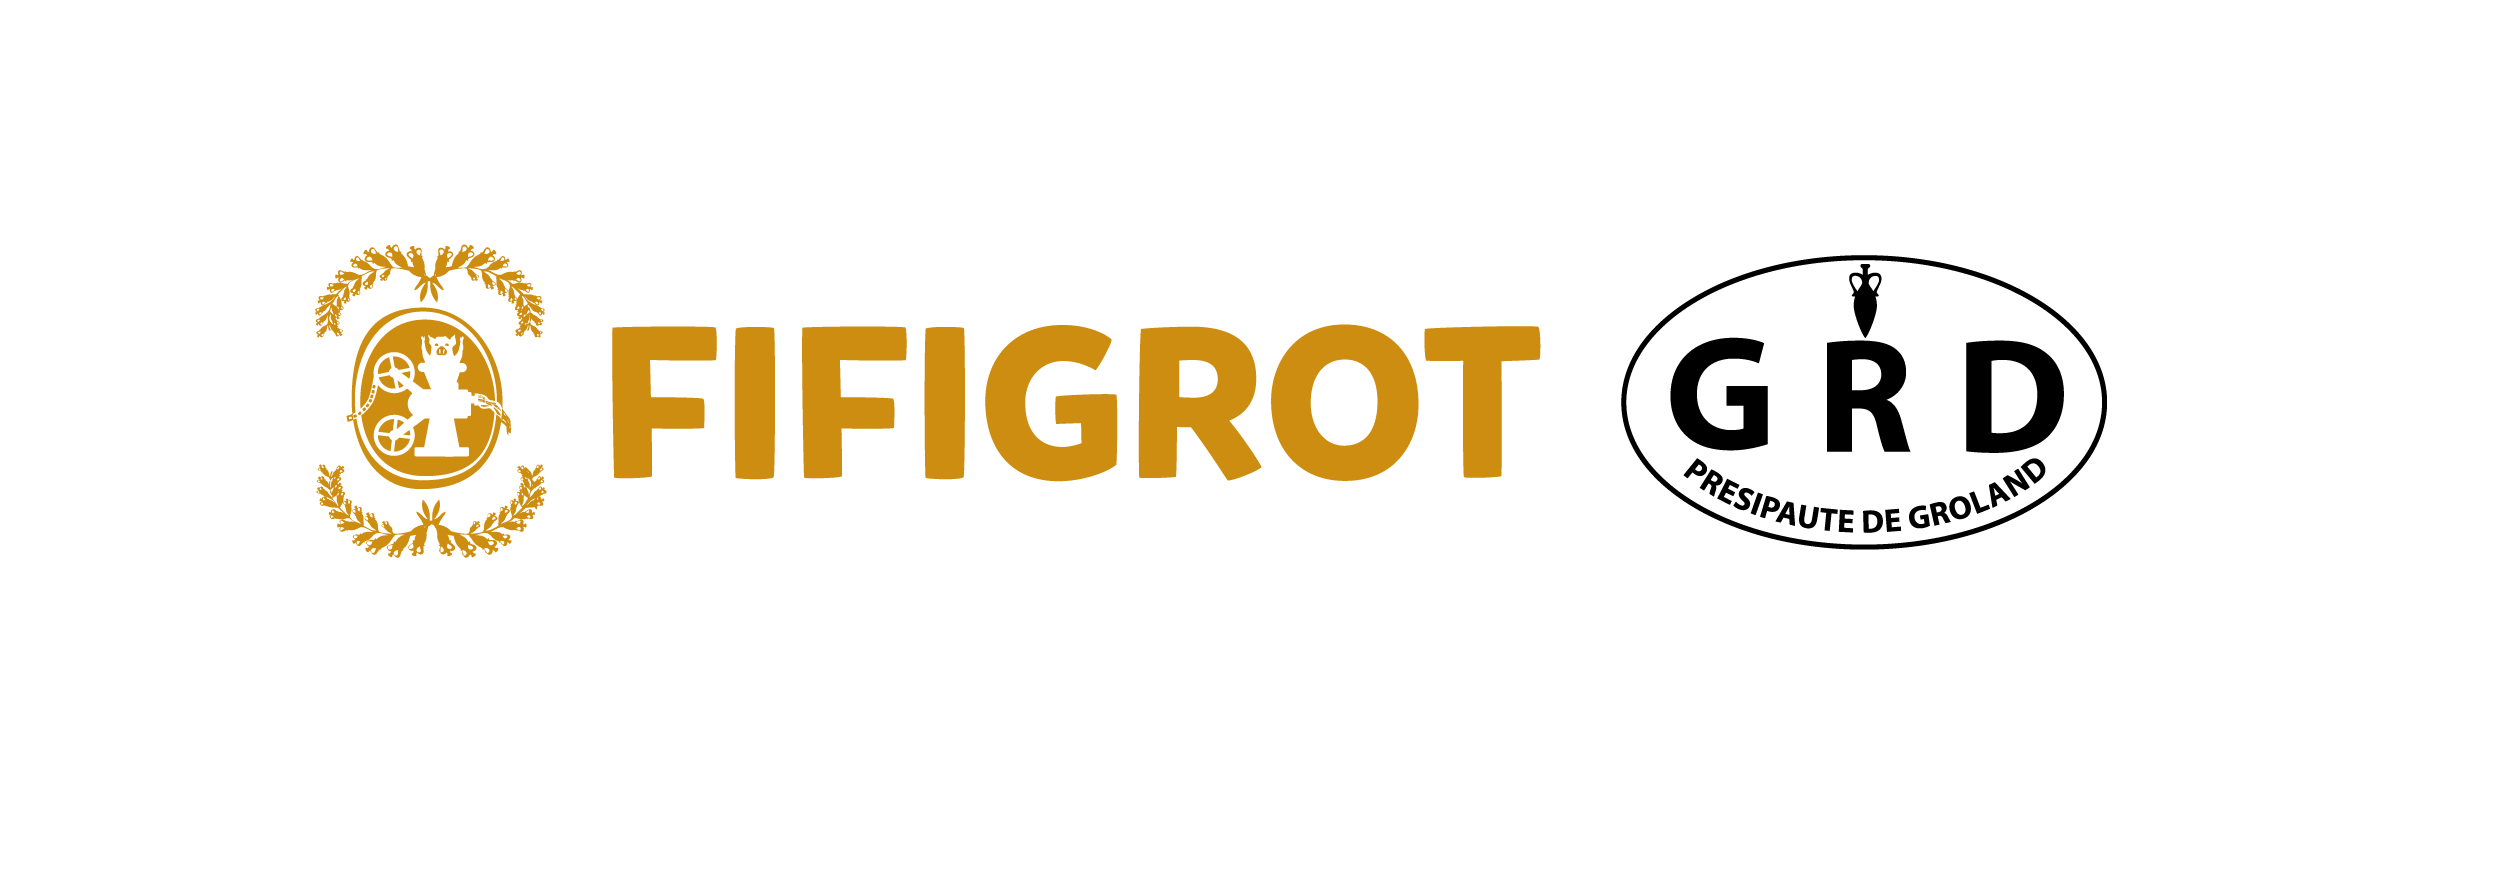 FIFIGROT